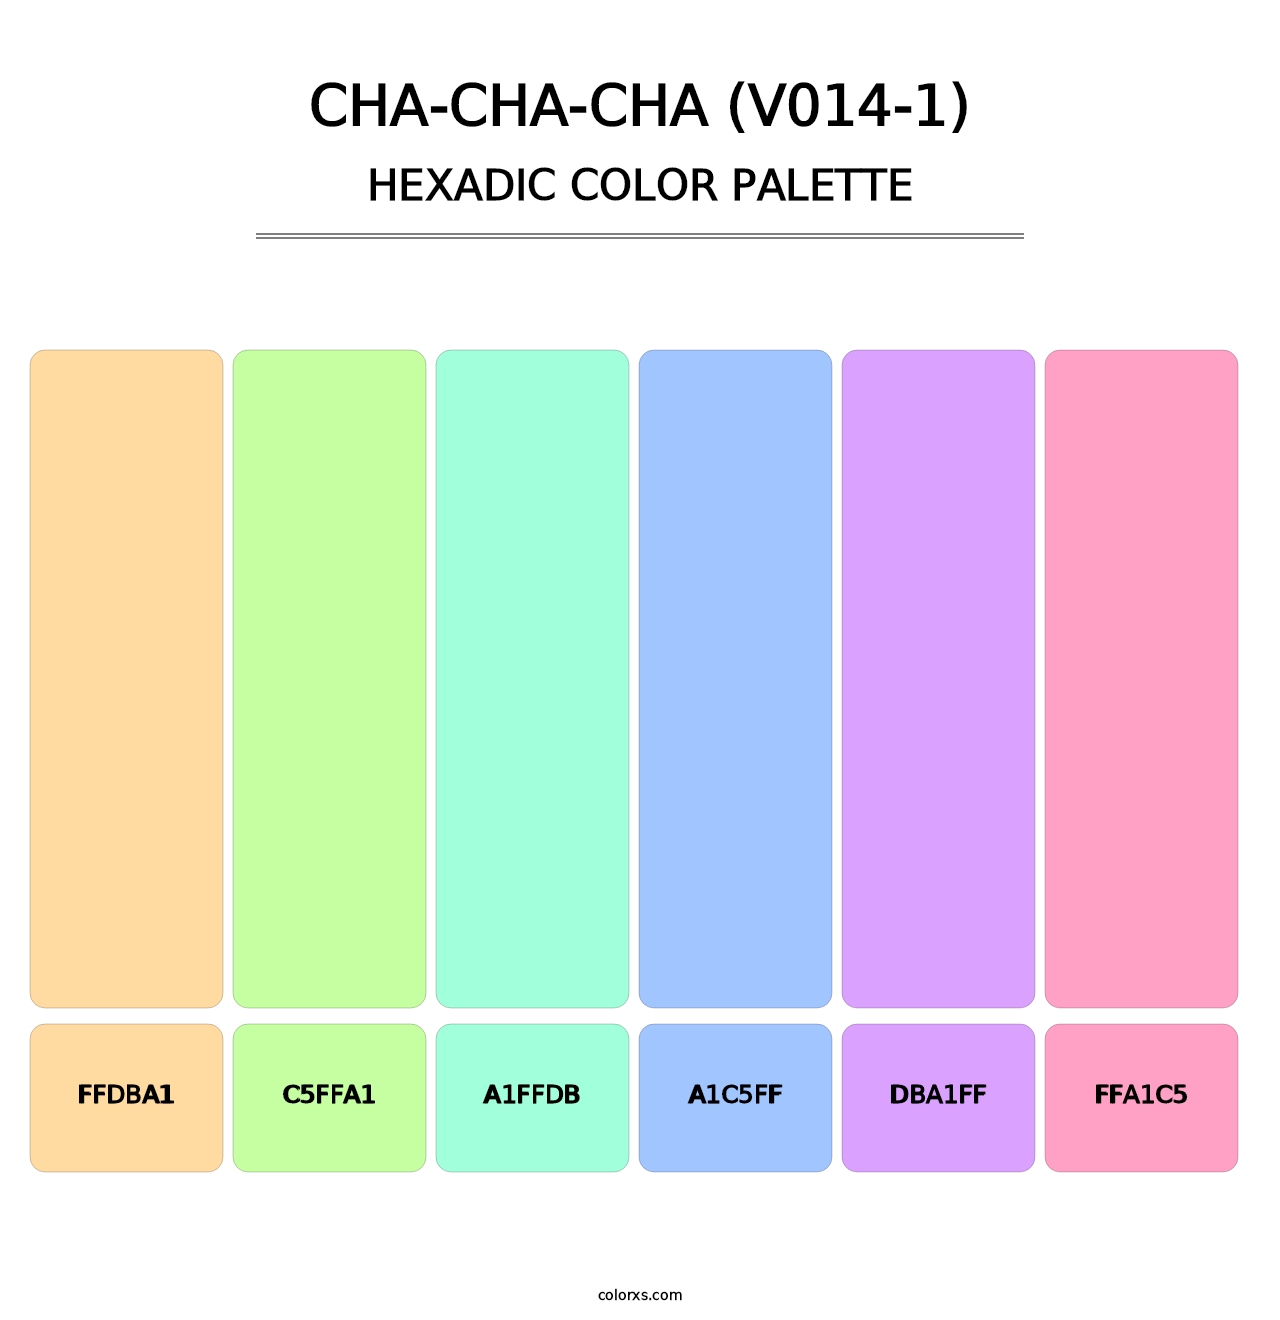 Cha-Cha-Cha (V014-1) - Hexadic Color Palette